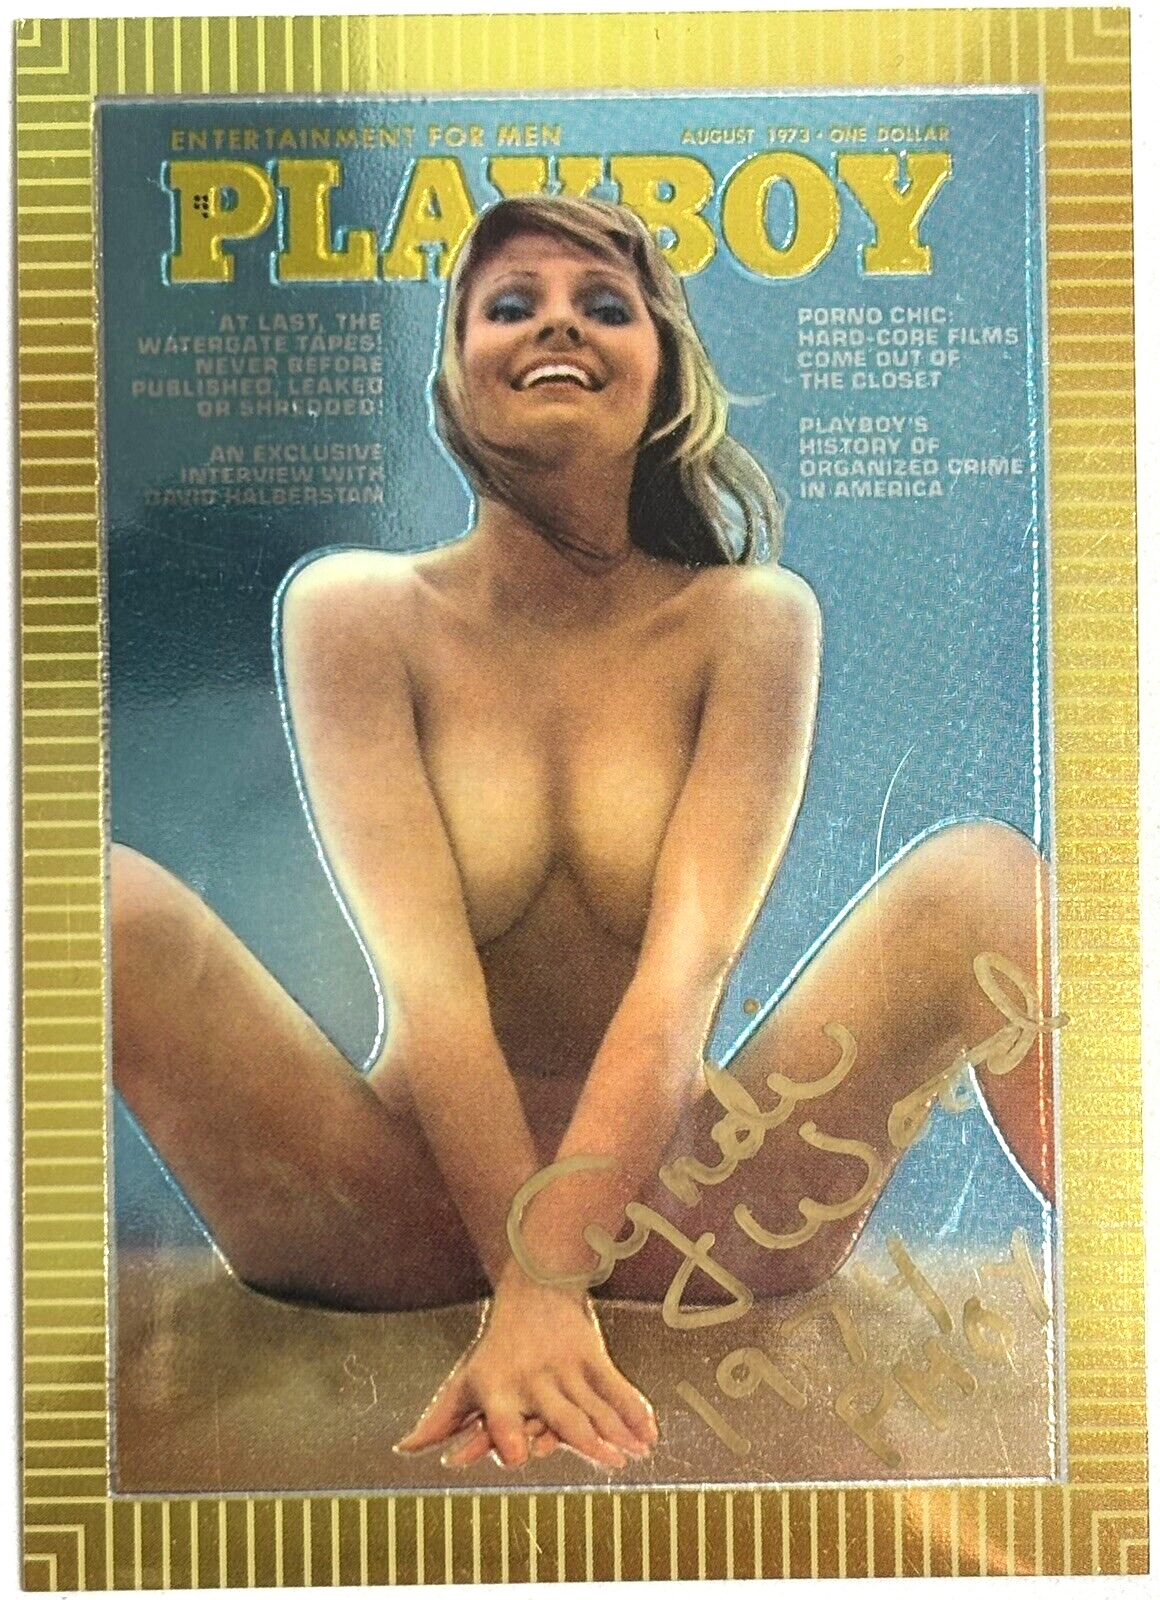 1995 Signed Playboy Chromium Cover Card ~ CYNDI WOOD AUTO ~ PMOY 1974